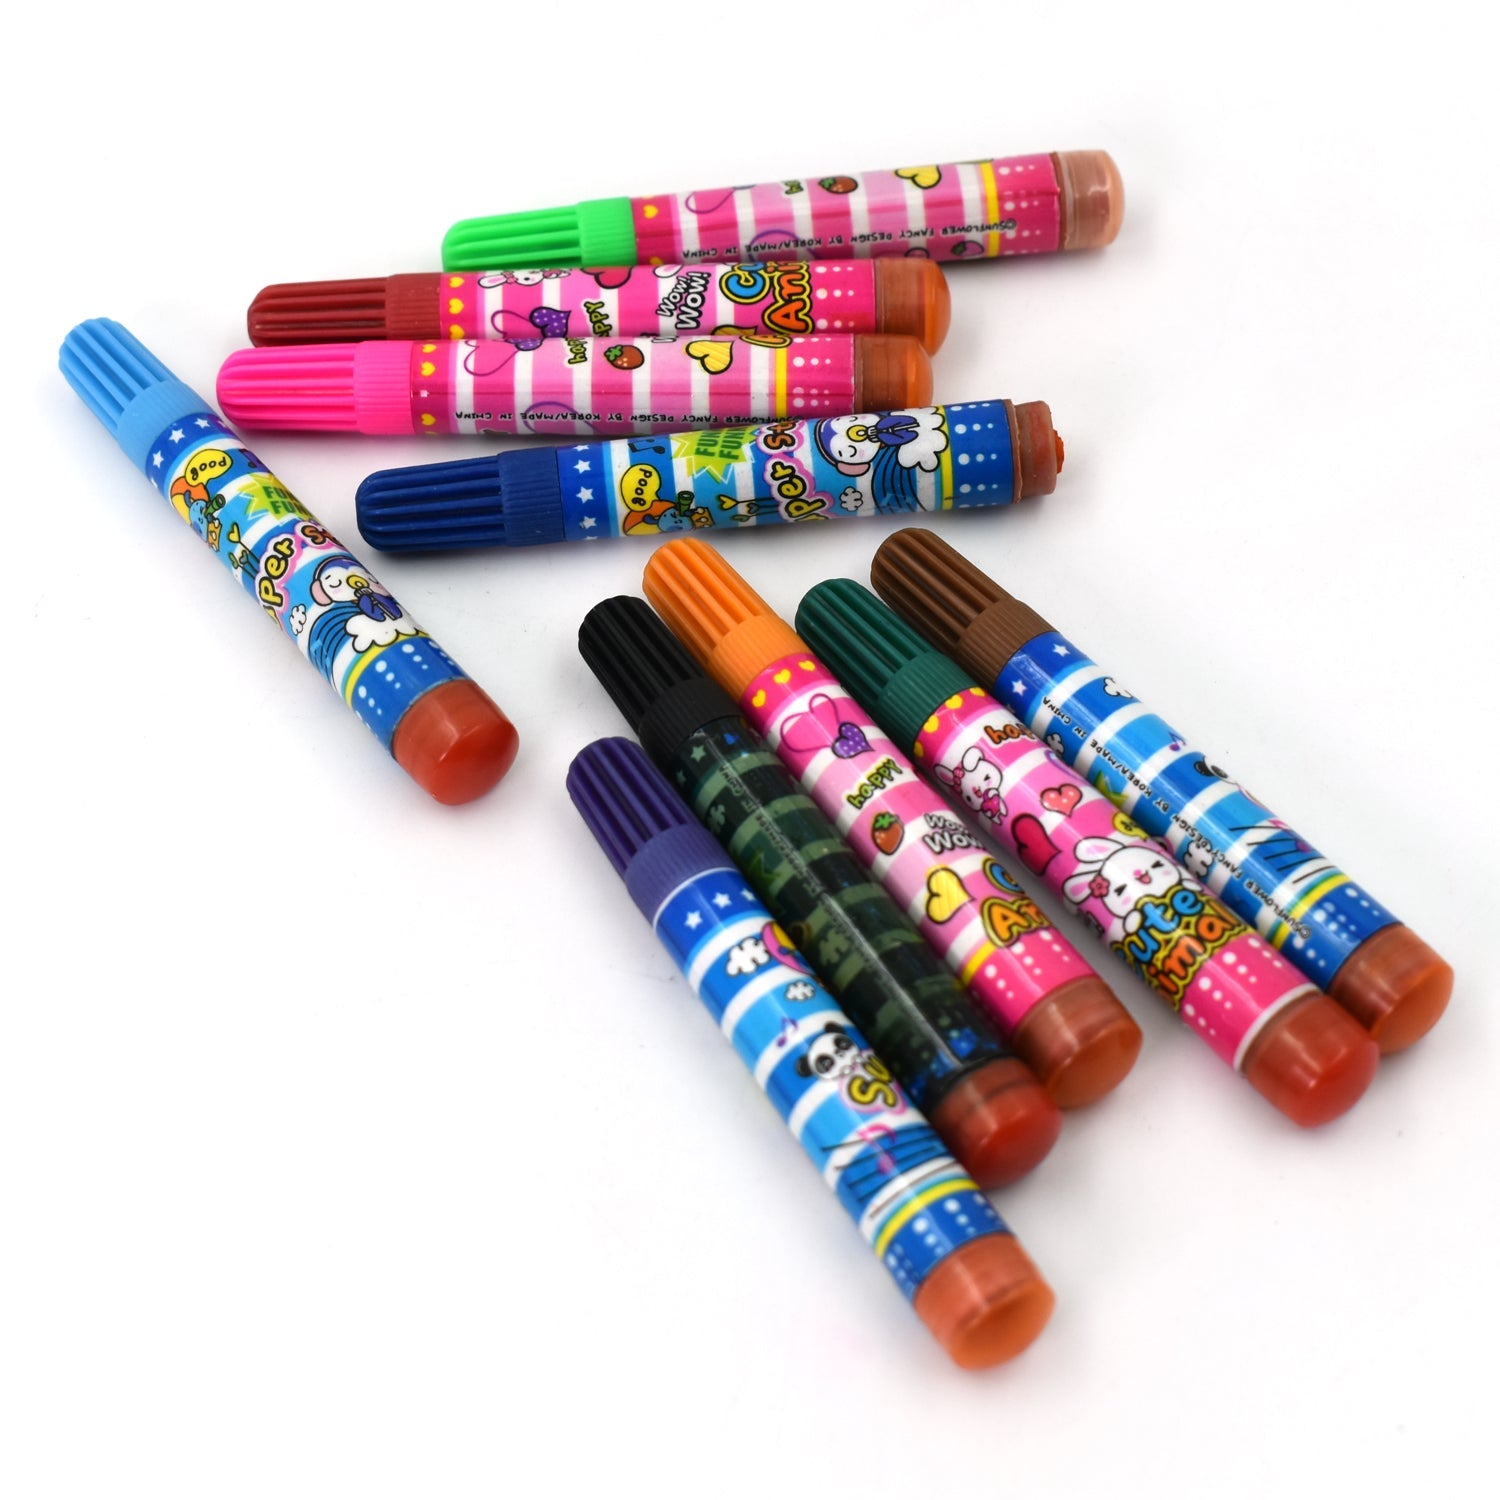 4814 Watercolor Brush Pen Color Sketch Pen 10 pieces for Stationary, Painting Pen, Drawing, Art Supplies (Multicolor) - DeoDap